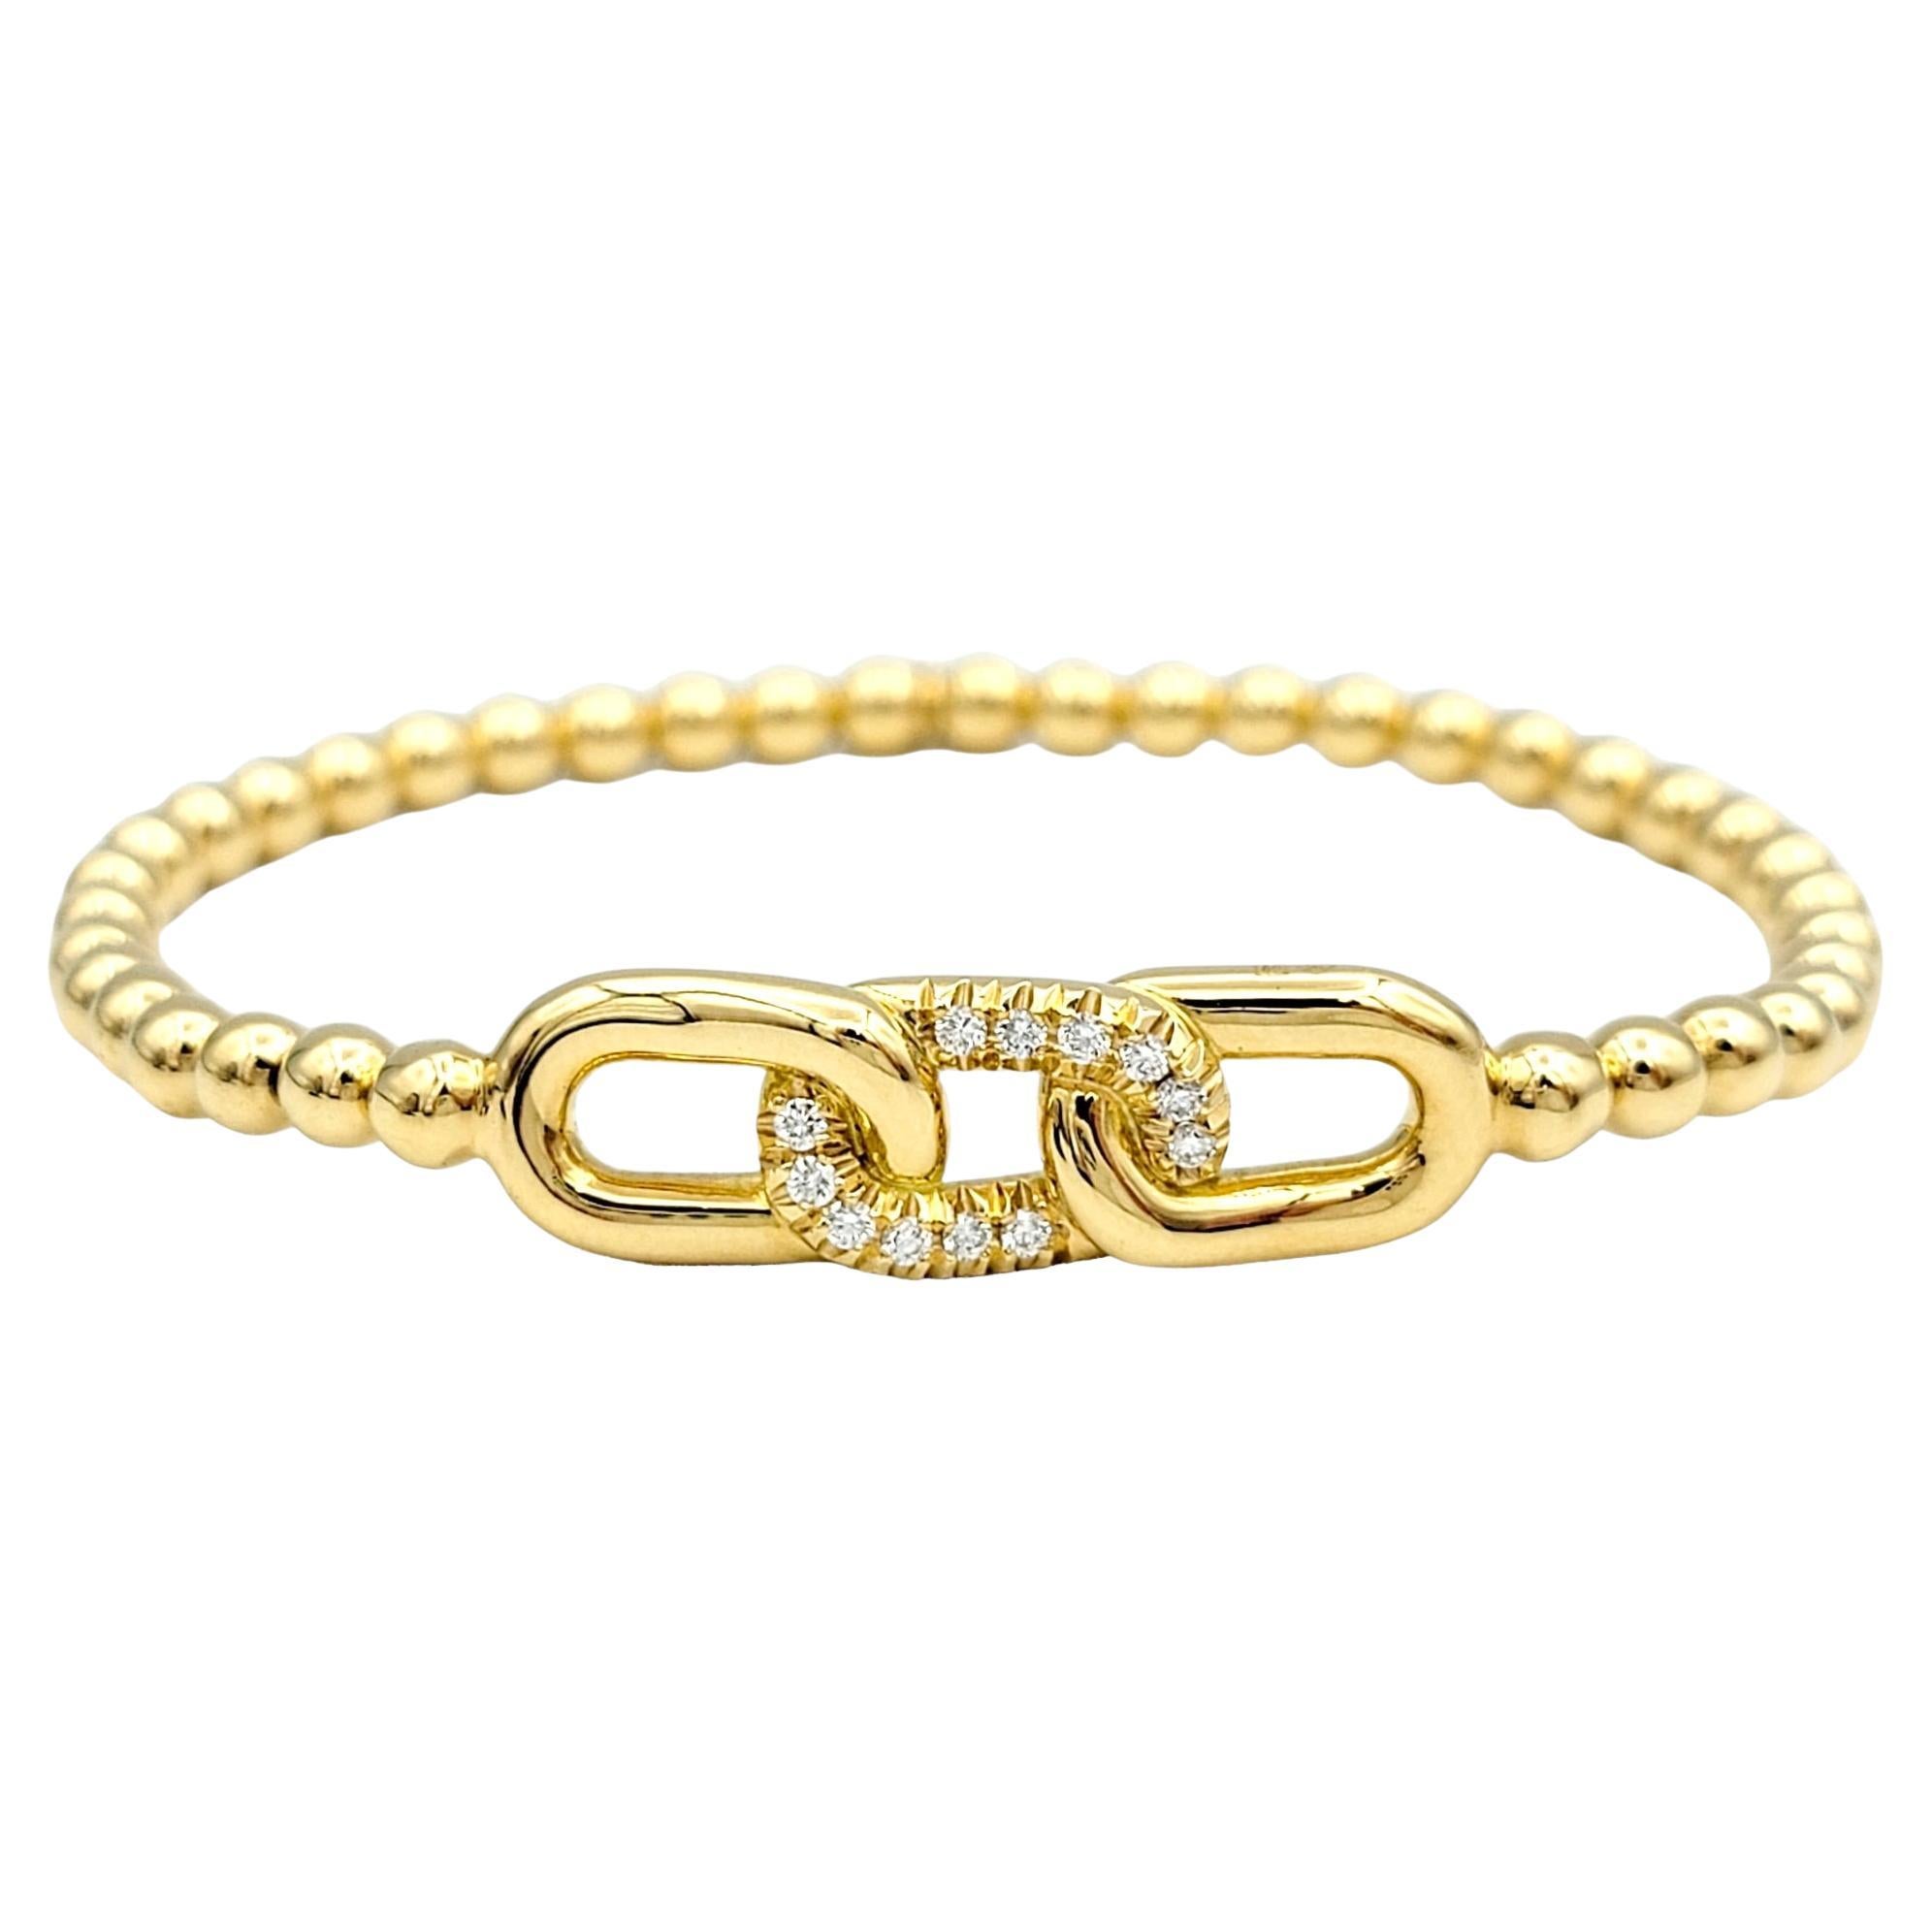 Hulchi Belluni Tresore Collection 4mm Stretch Bracelet Yellow Gold & Diamonds